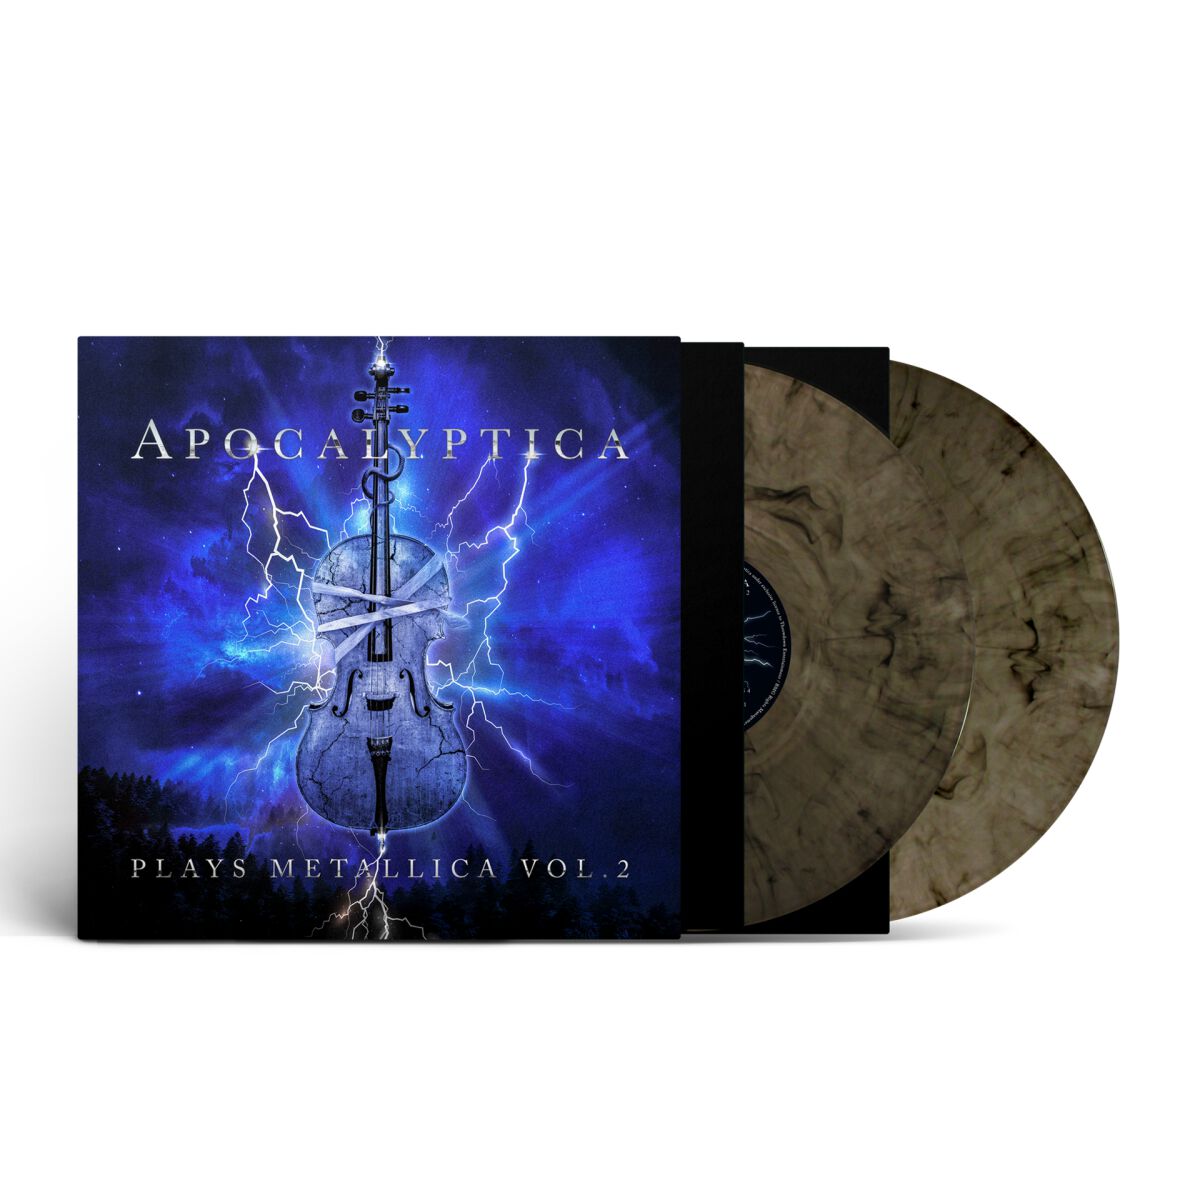 Plays Metallica Vol. 2 von Apocalyptica - 2-LP (Coloured, Limited Edition, Standard)